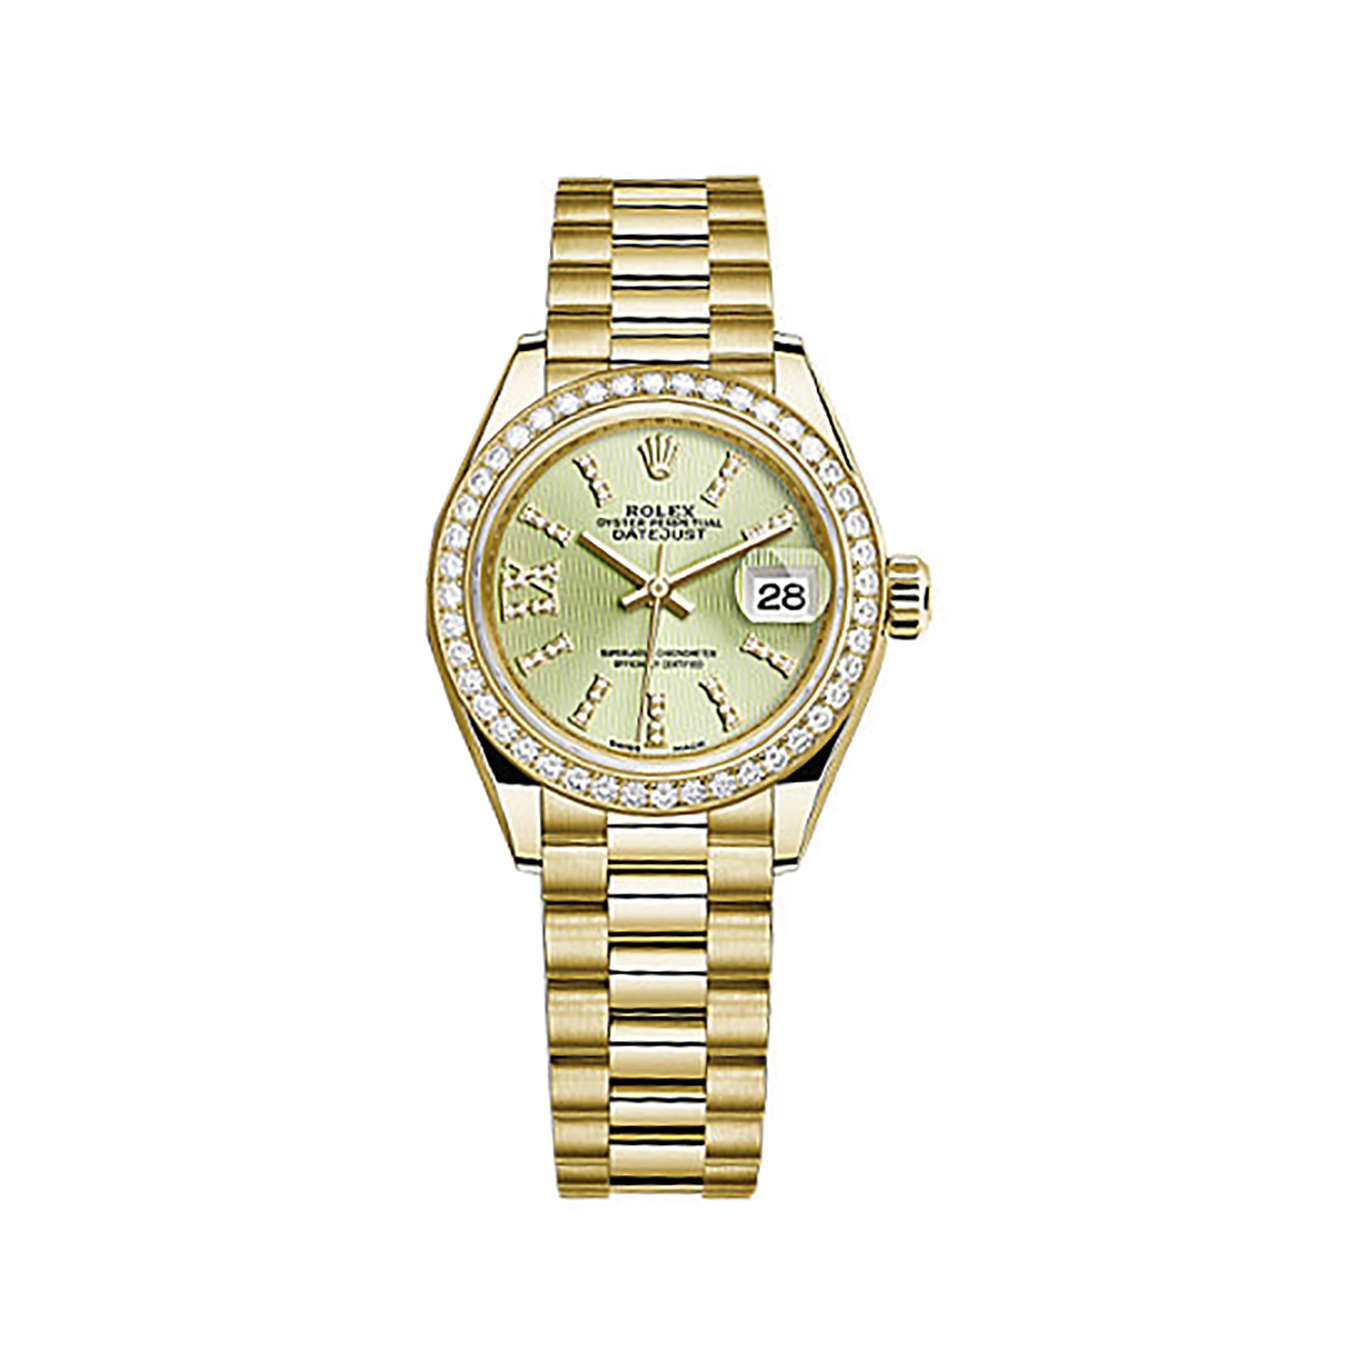 Lady-Datejust 28 279138RBR Gold & Diamonds Watch (Linden Set with Diamonds)